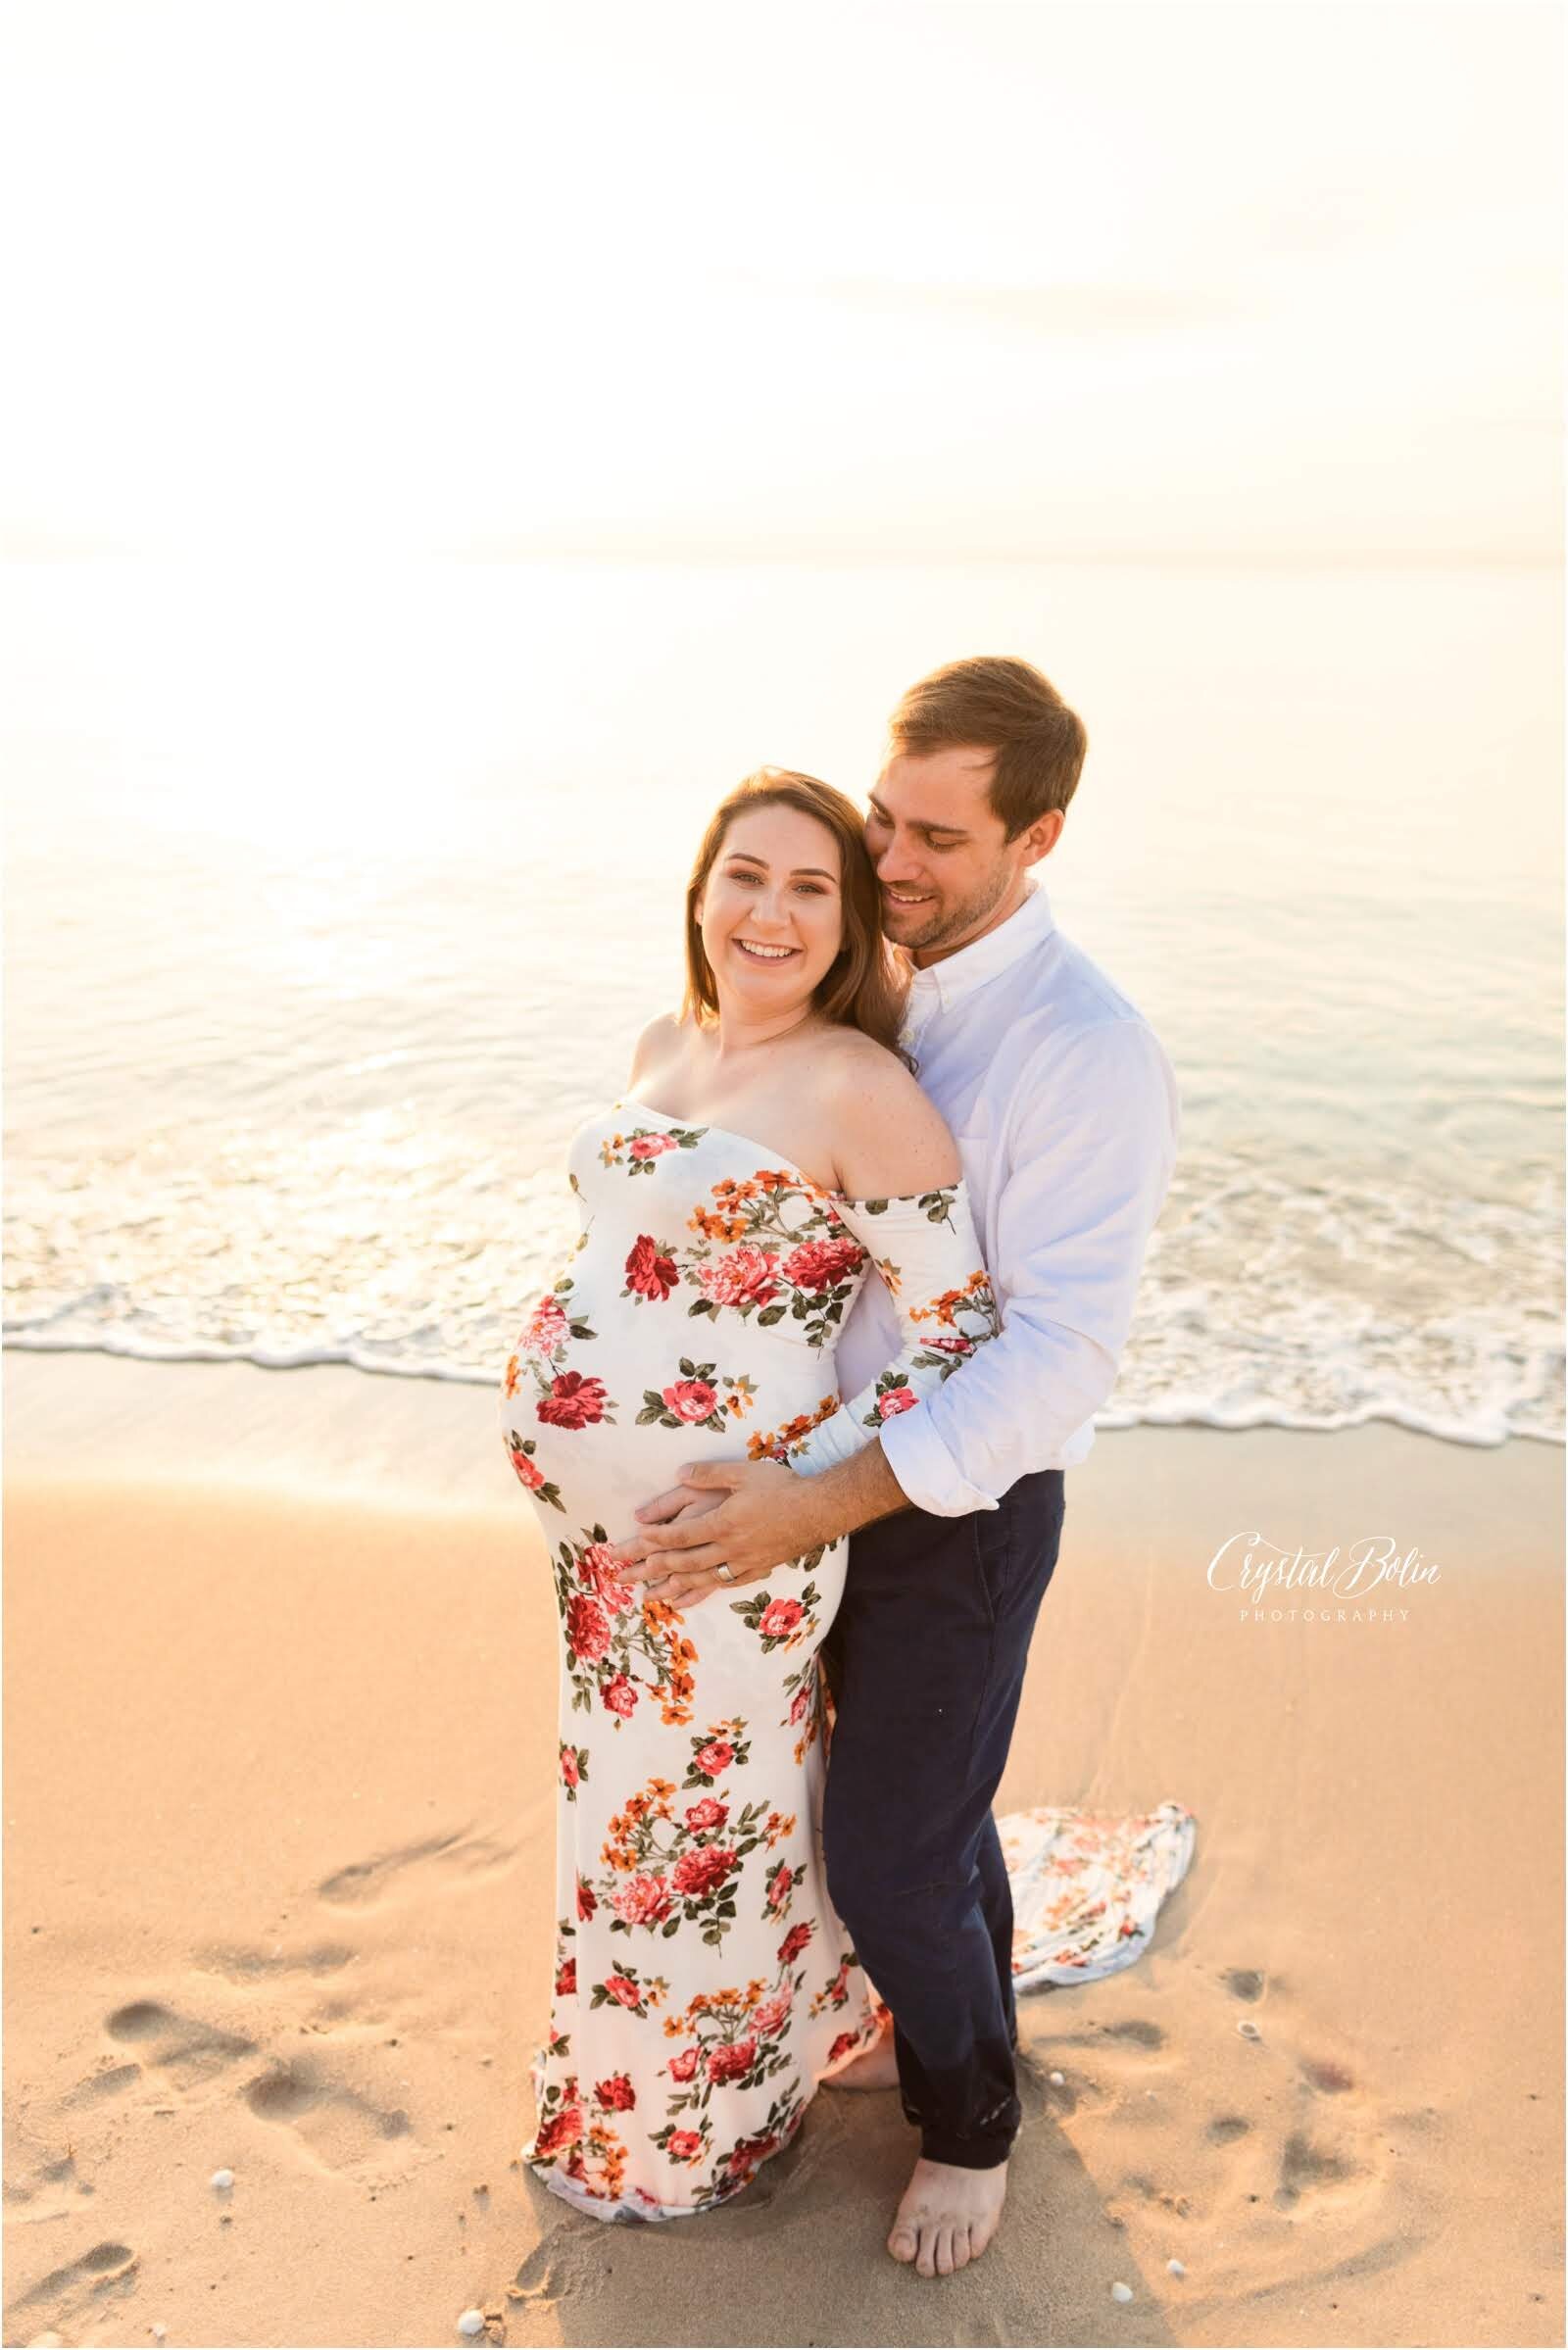 Kaylee & Brandon | Maternity Photos